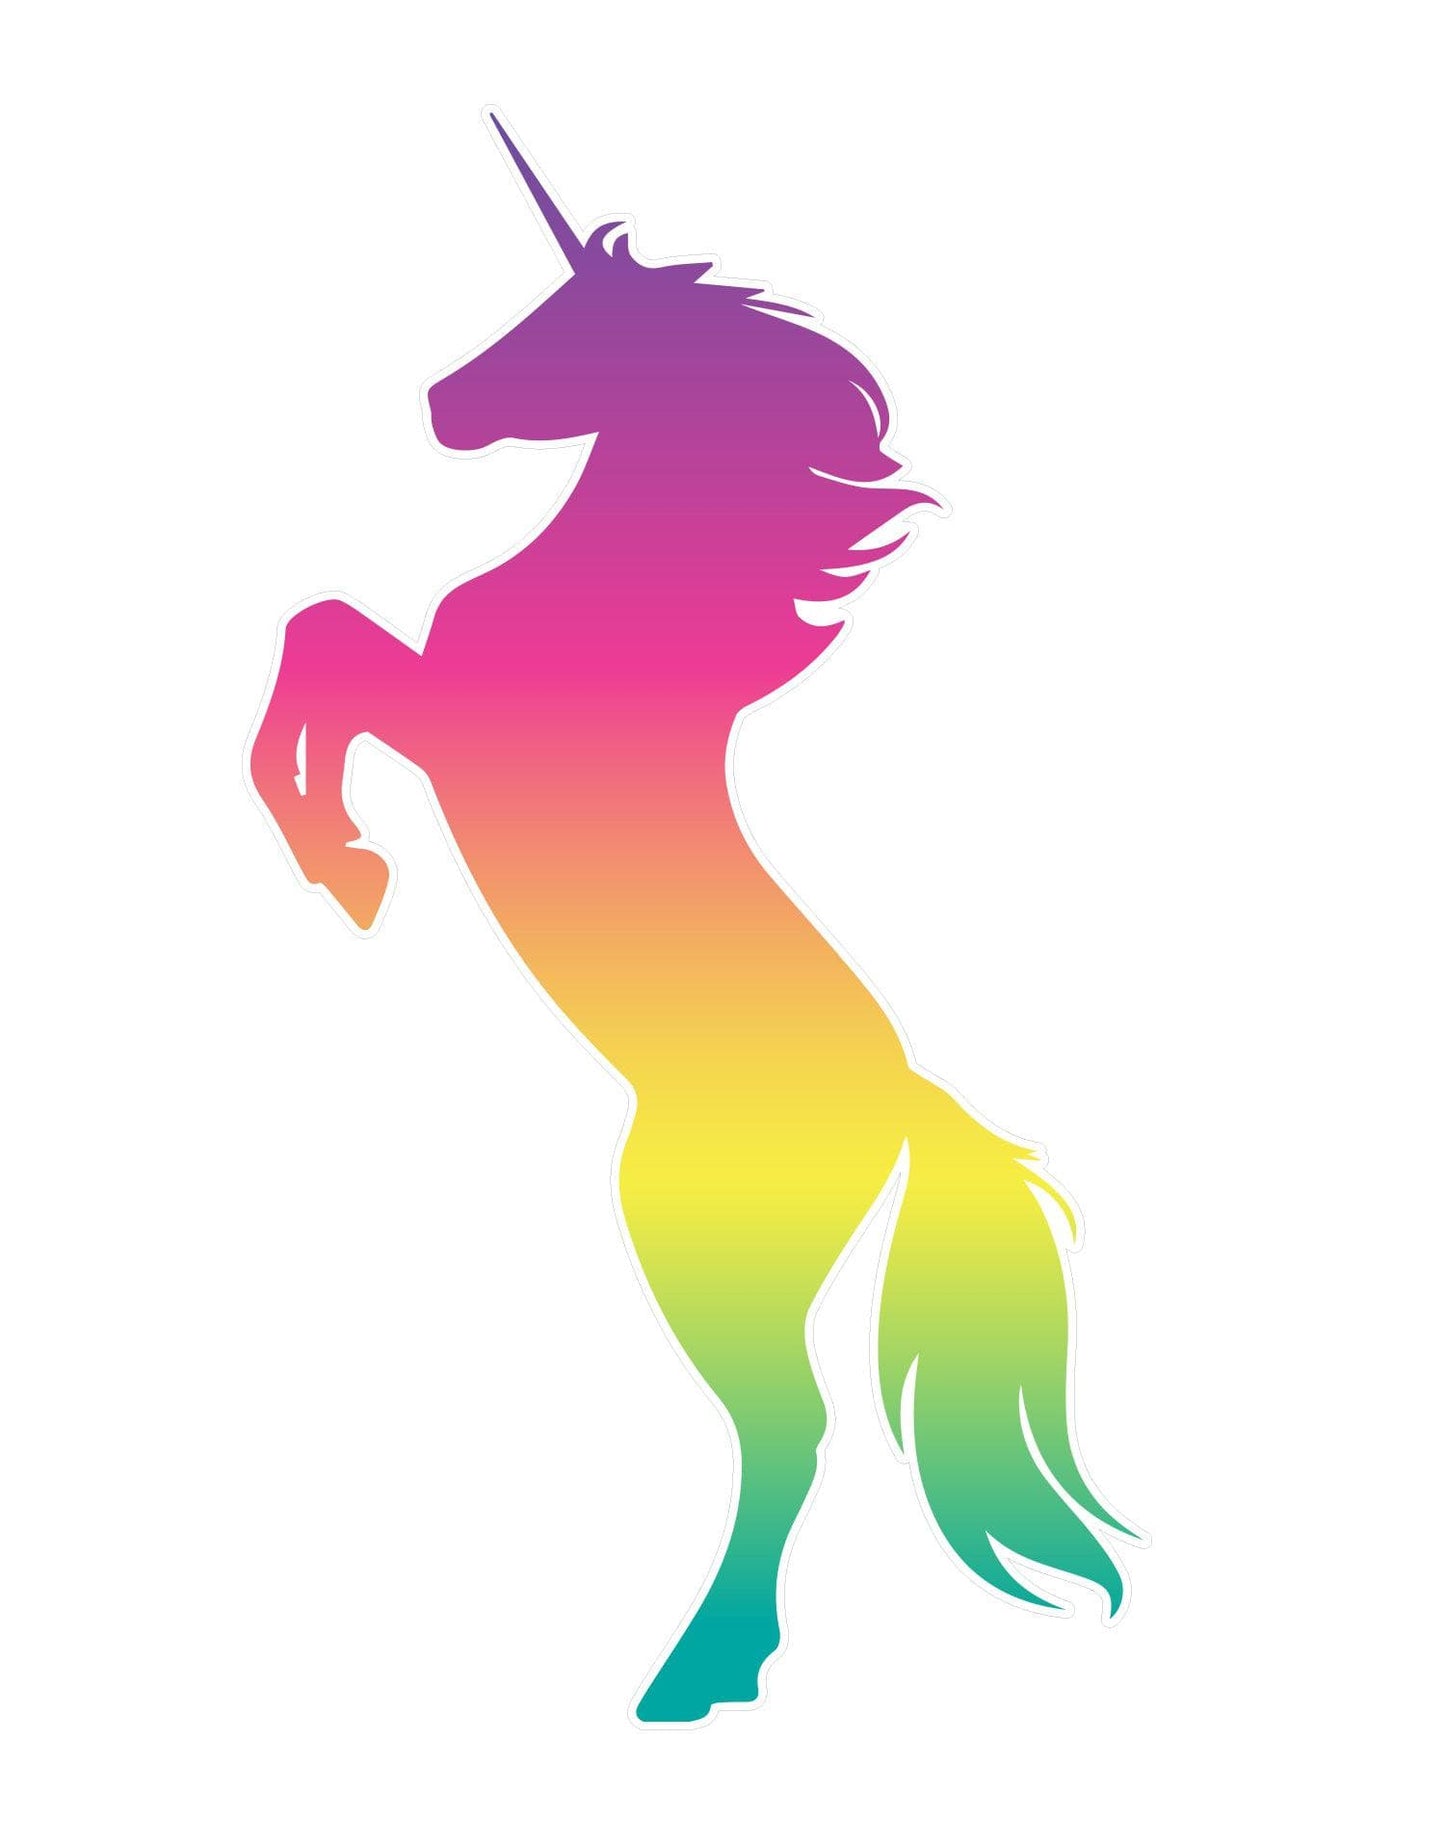 Rainbow Unicorn Wall Decal Sticker. Girl’s bedroom decor. Fantasy Silhouette Design. #6141